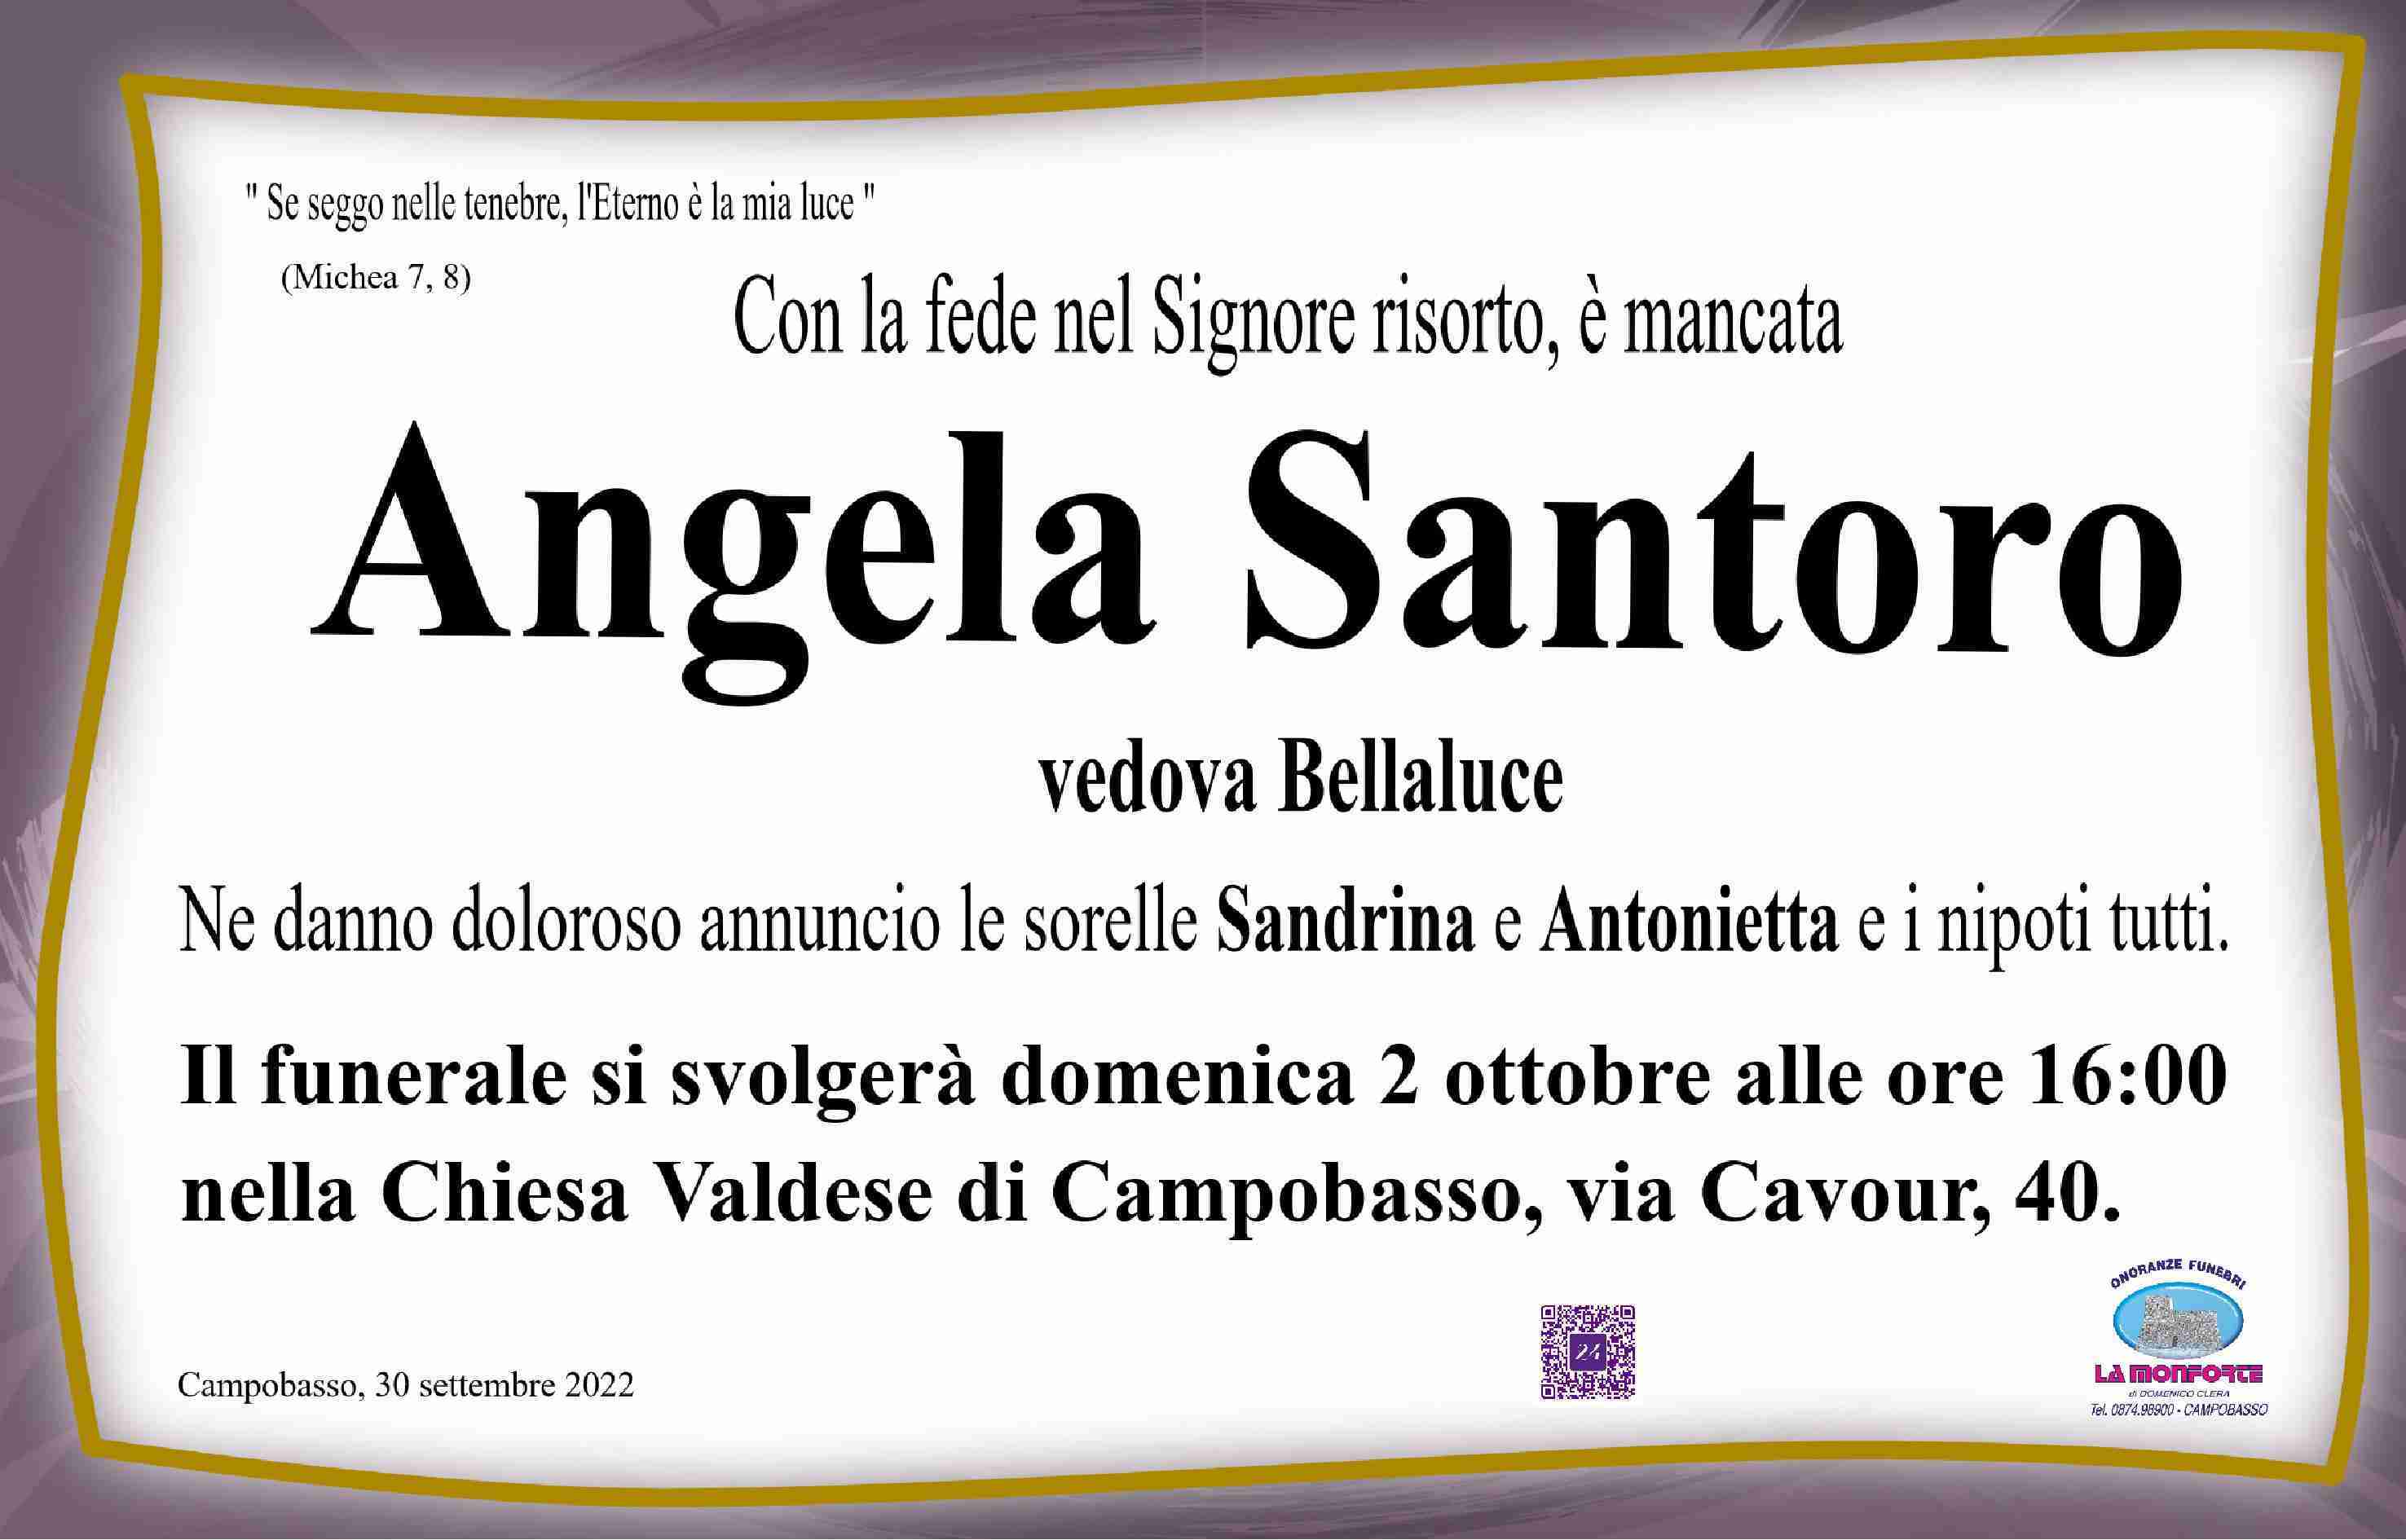 Angela Santoro